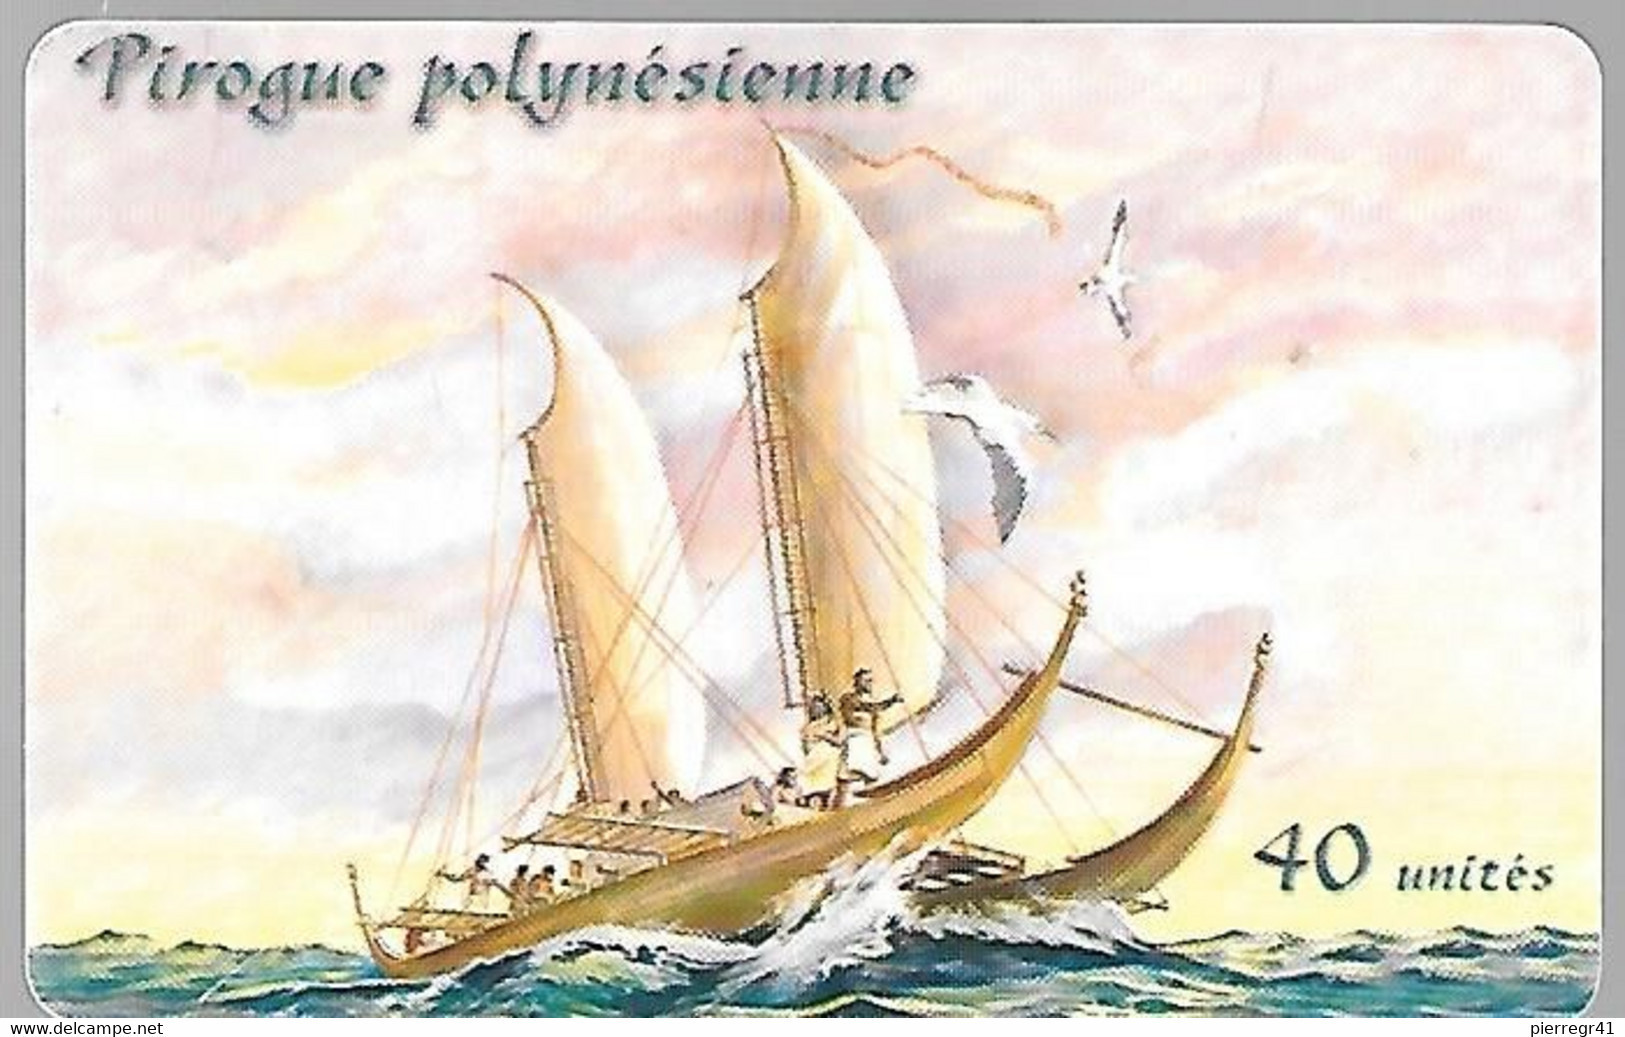 CARTE-PUCE-POLYNESIE-40U-PF138-GEMA-09/03-PIROGUES POLYNESIENNES -UTILISE-TBE/RARE - Polynésie Française